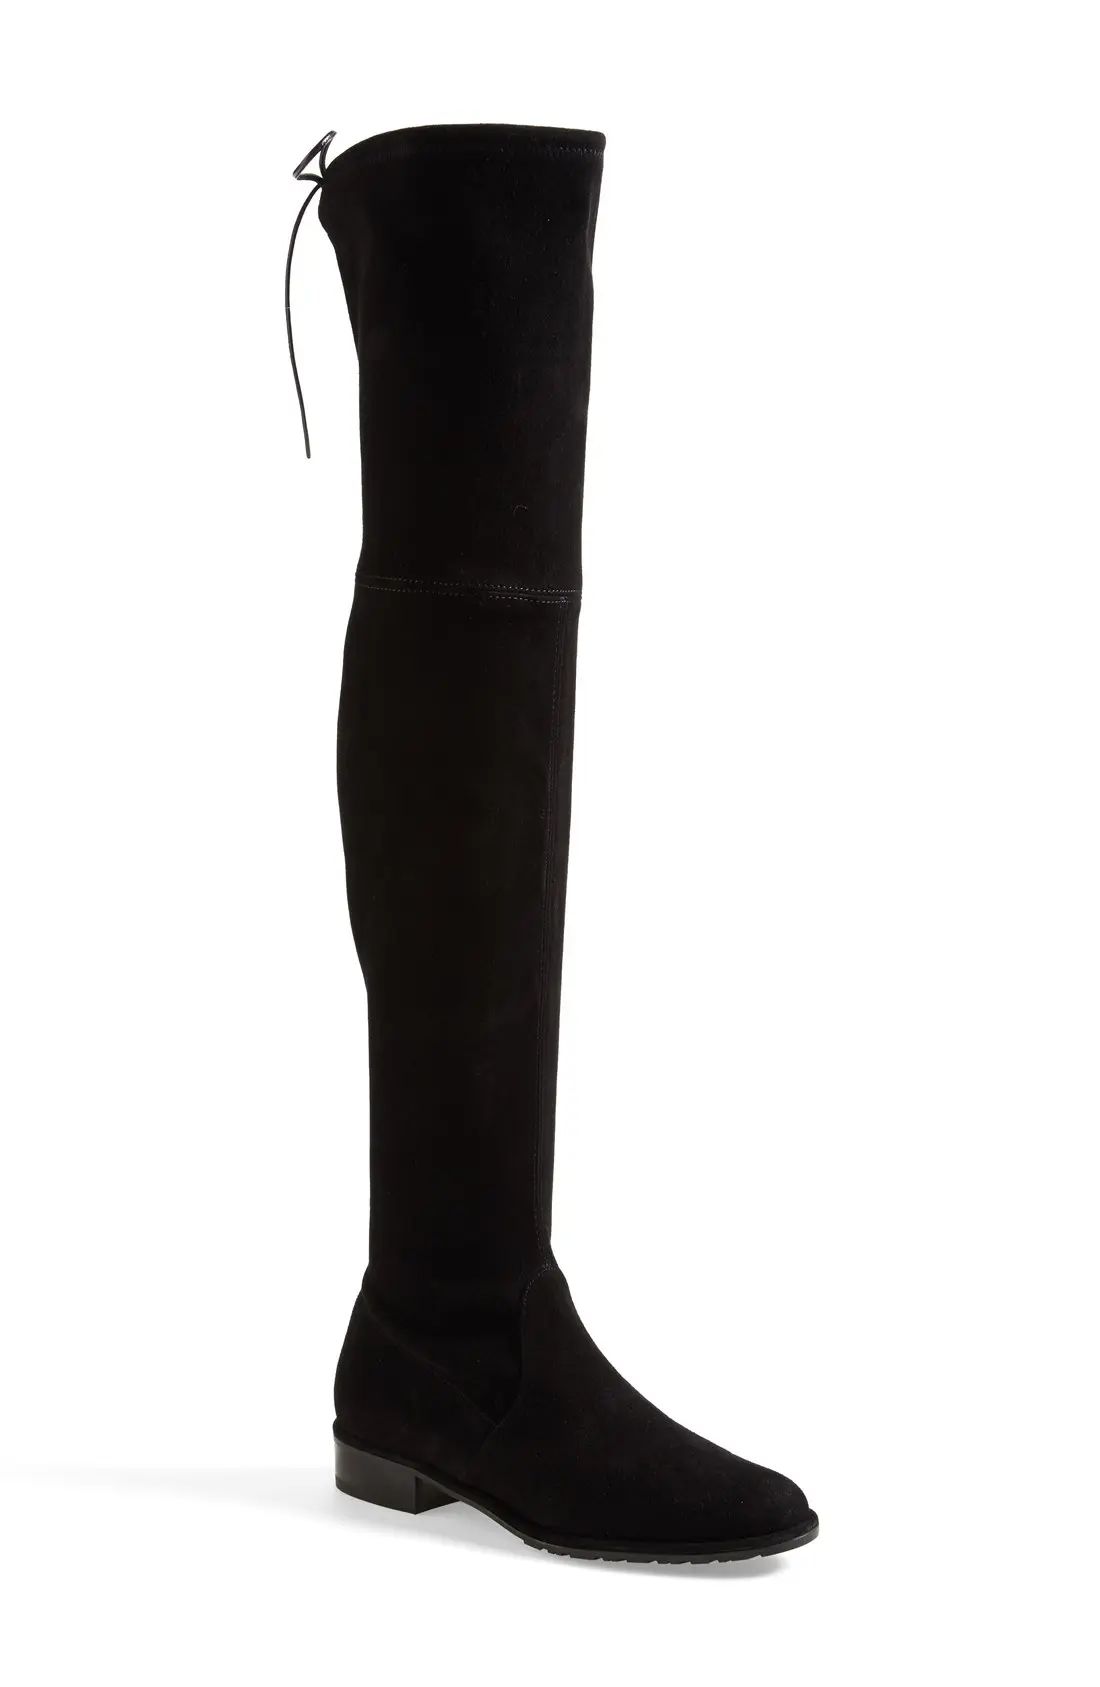 Women's Stuart Weitzman 'Lowland' Over The Knee Boot, Size 4 M - Black | Nordstrom